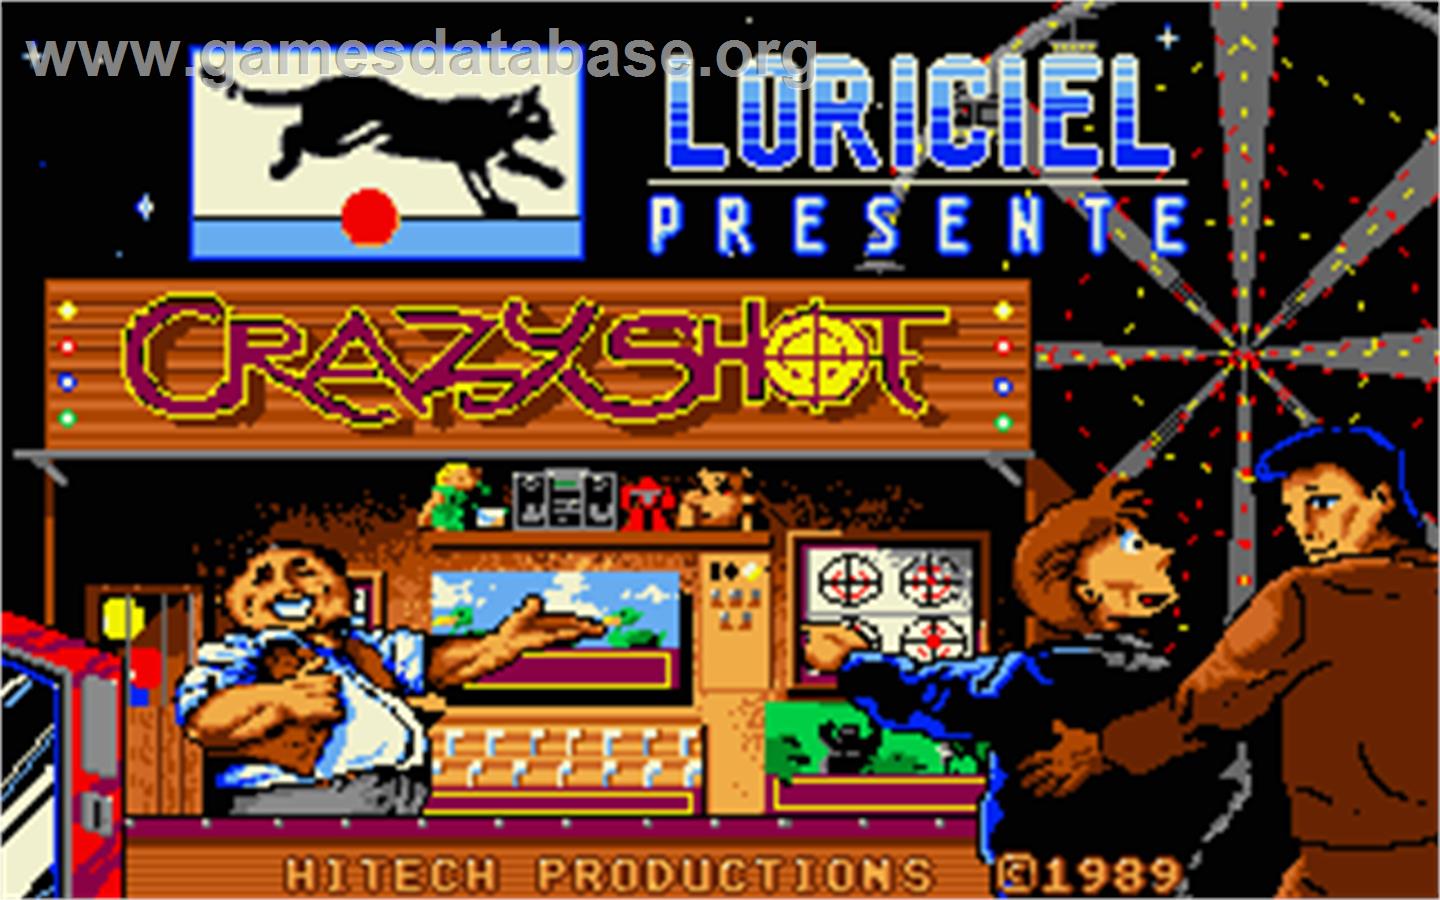 Crazy Shot - Atari ST - Artwork - Title Screen